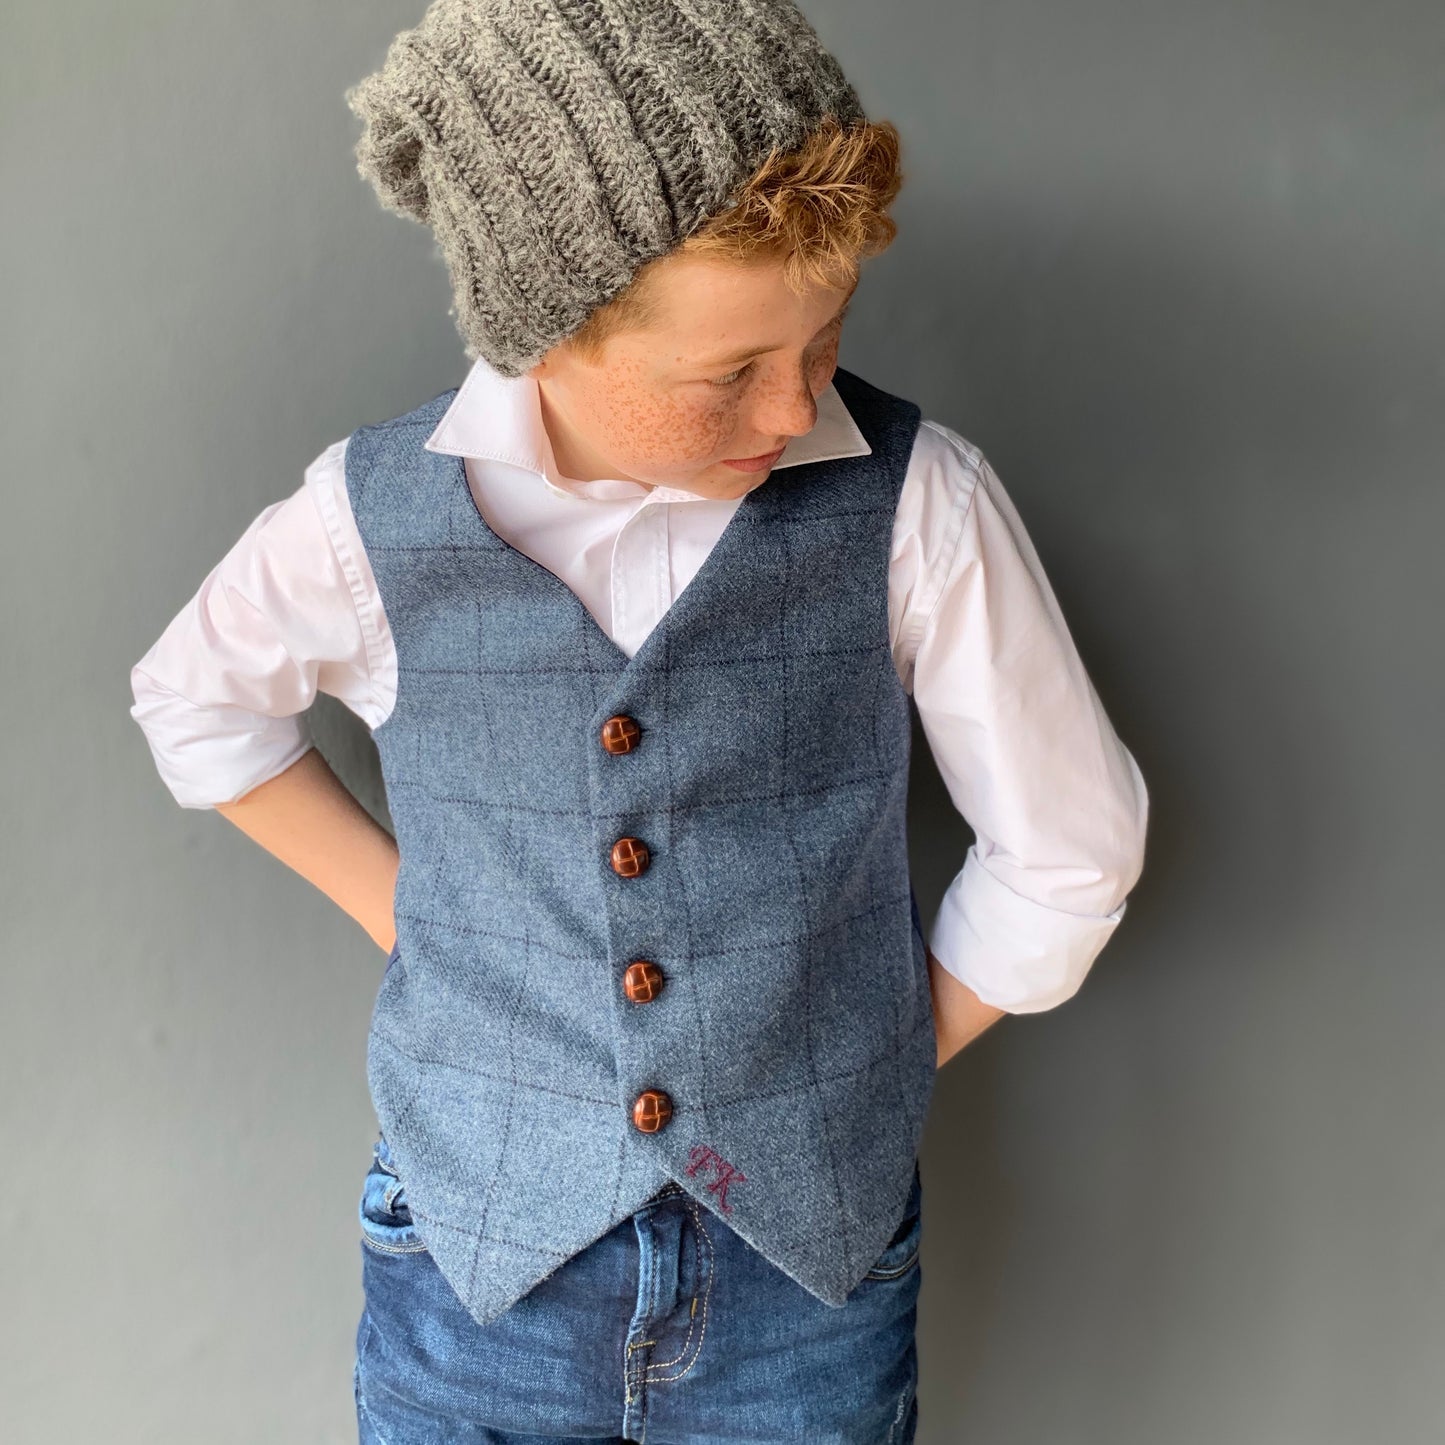 'Earl of Grantham' Boys waistcoat handmade in a 100% British tweed